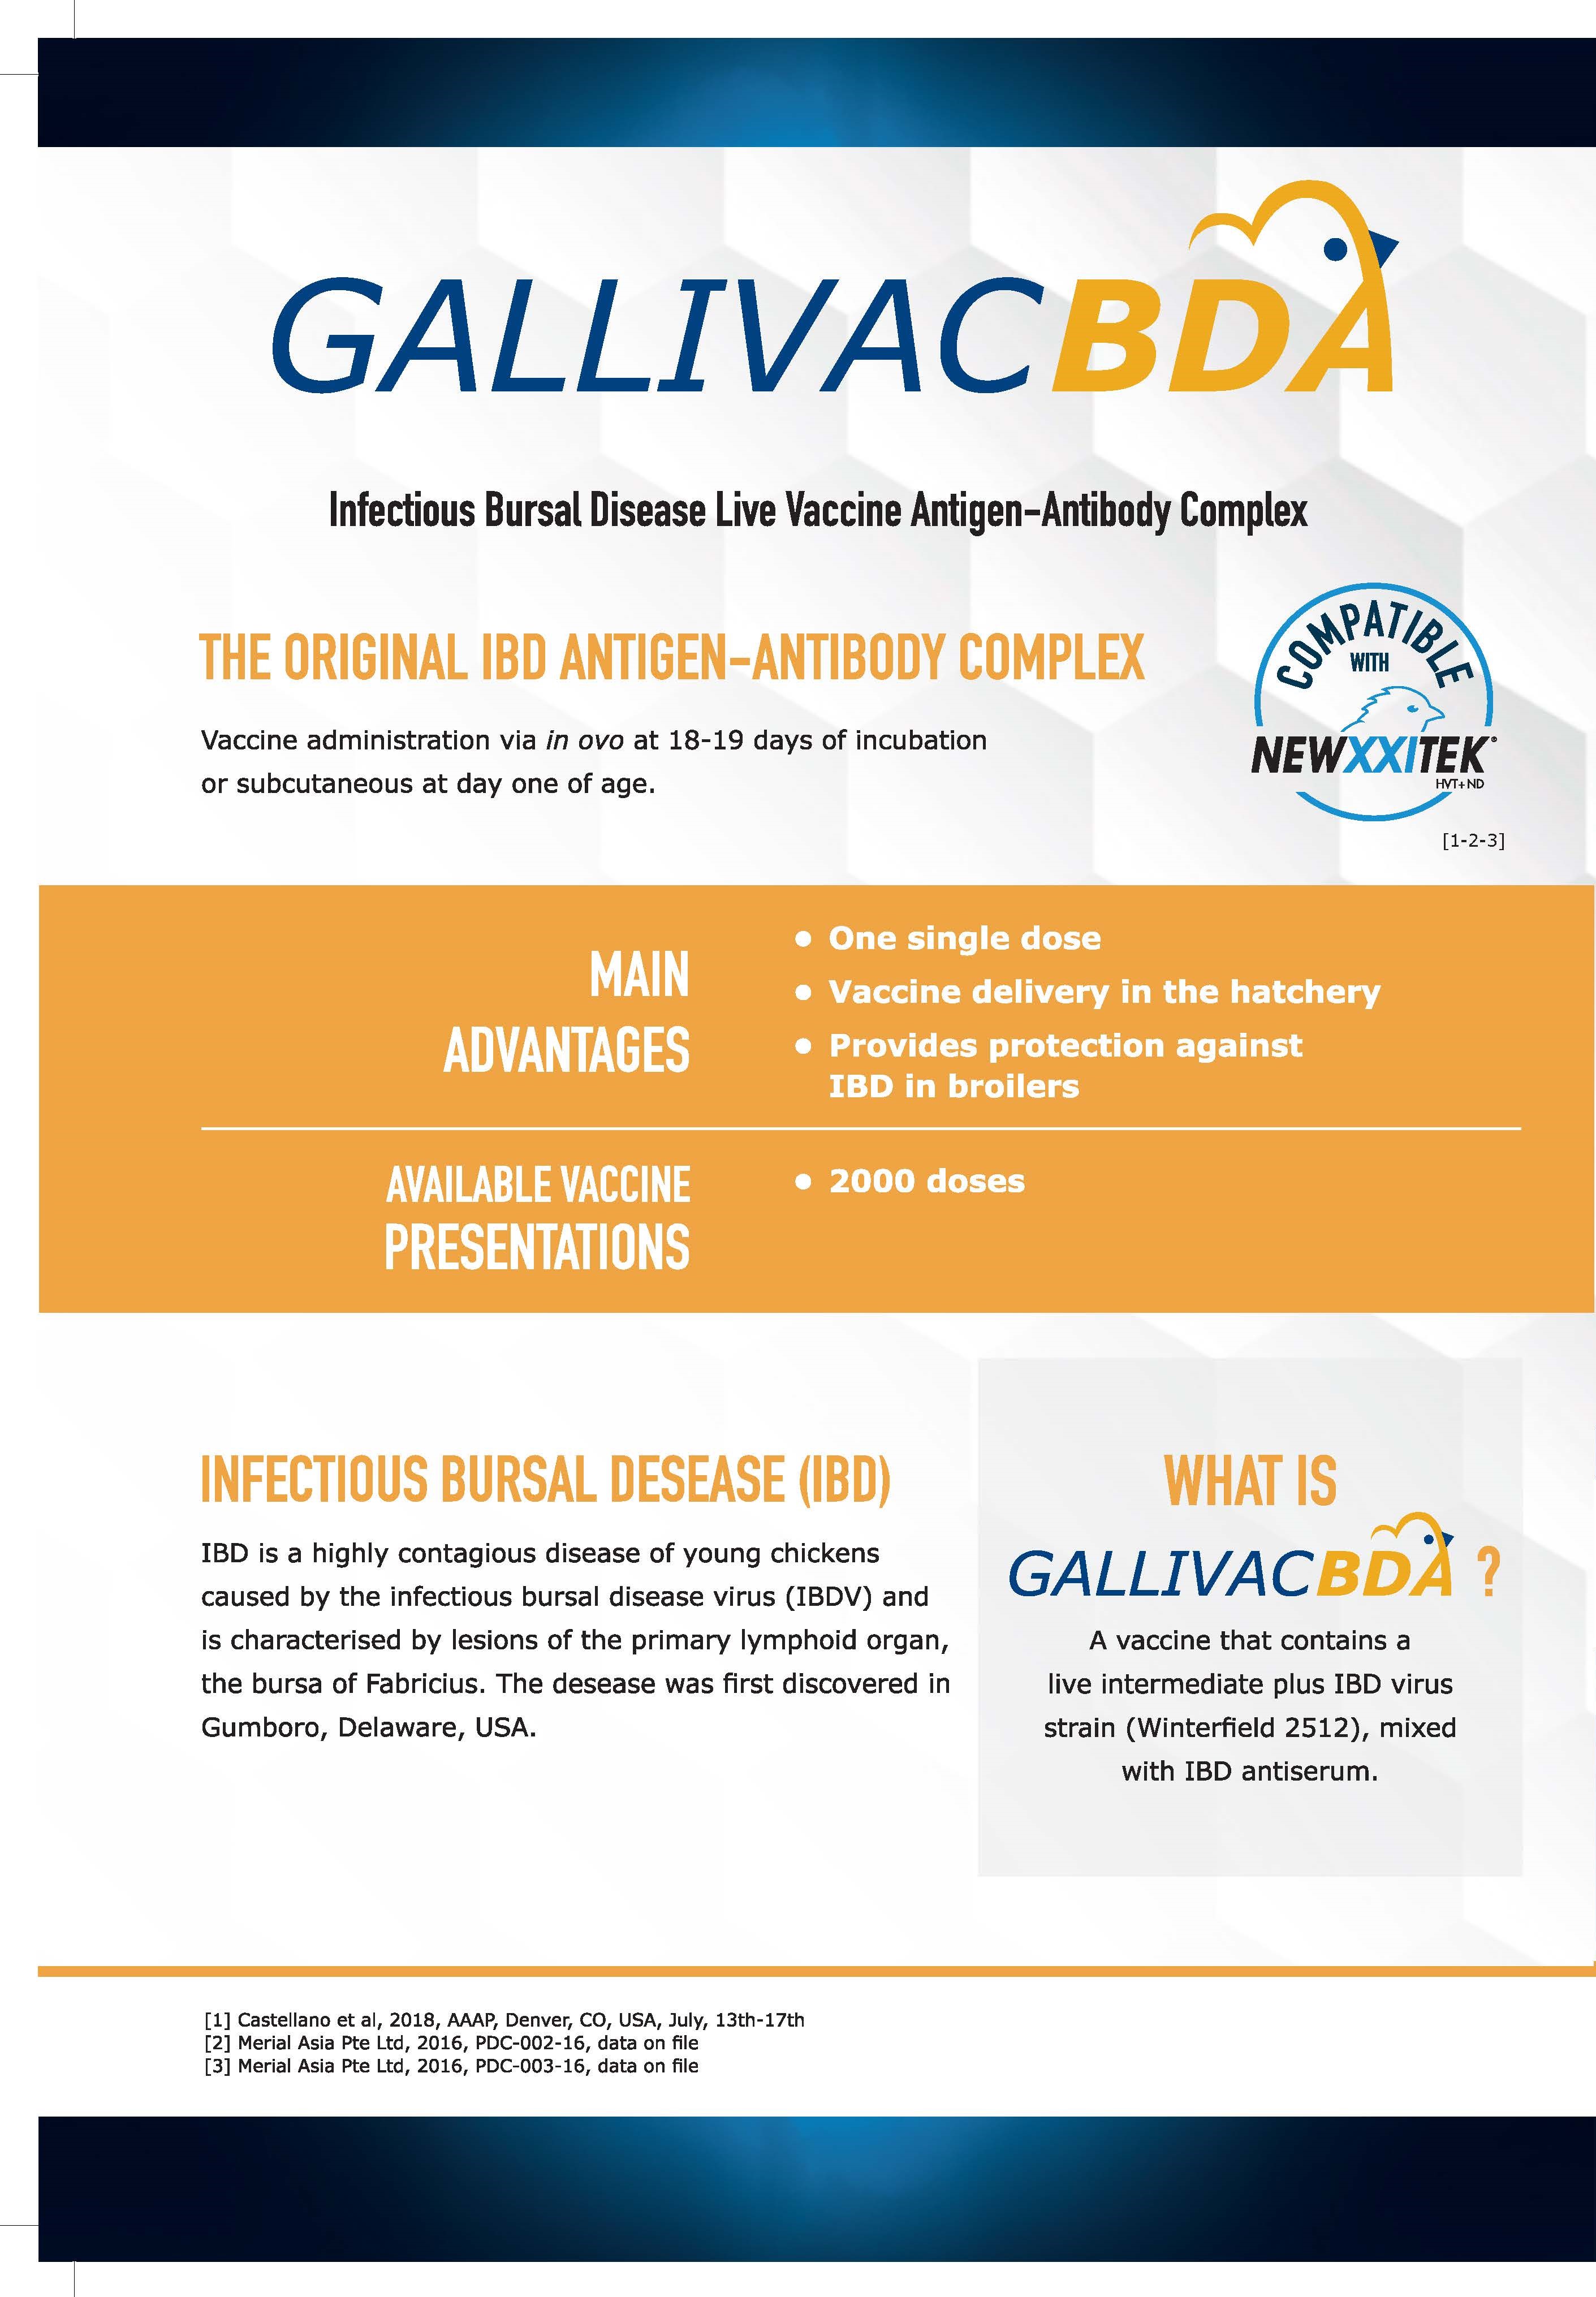 Gallivac BDA